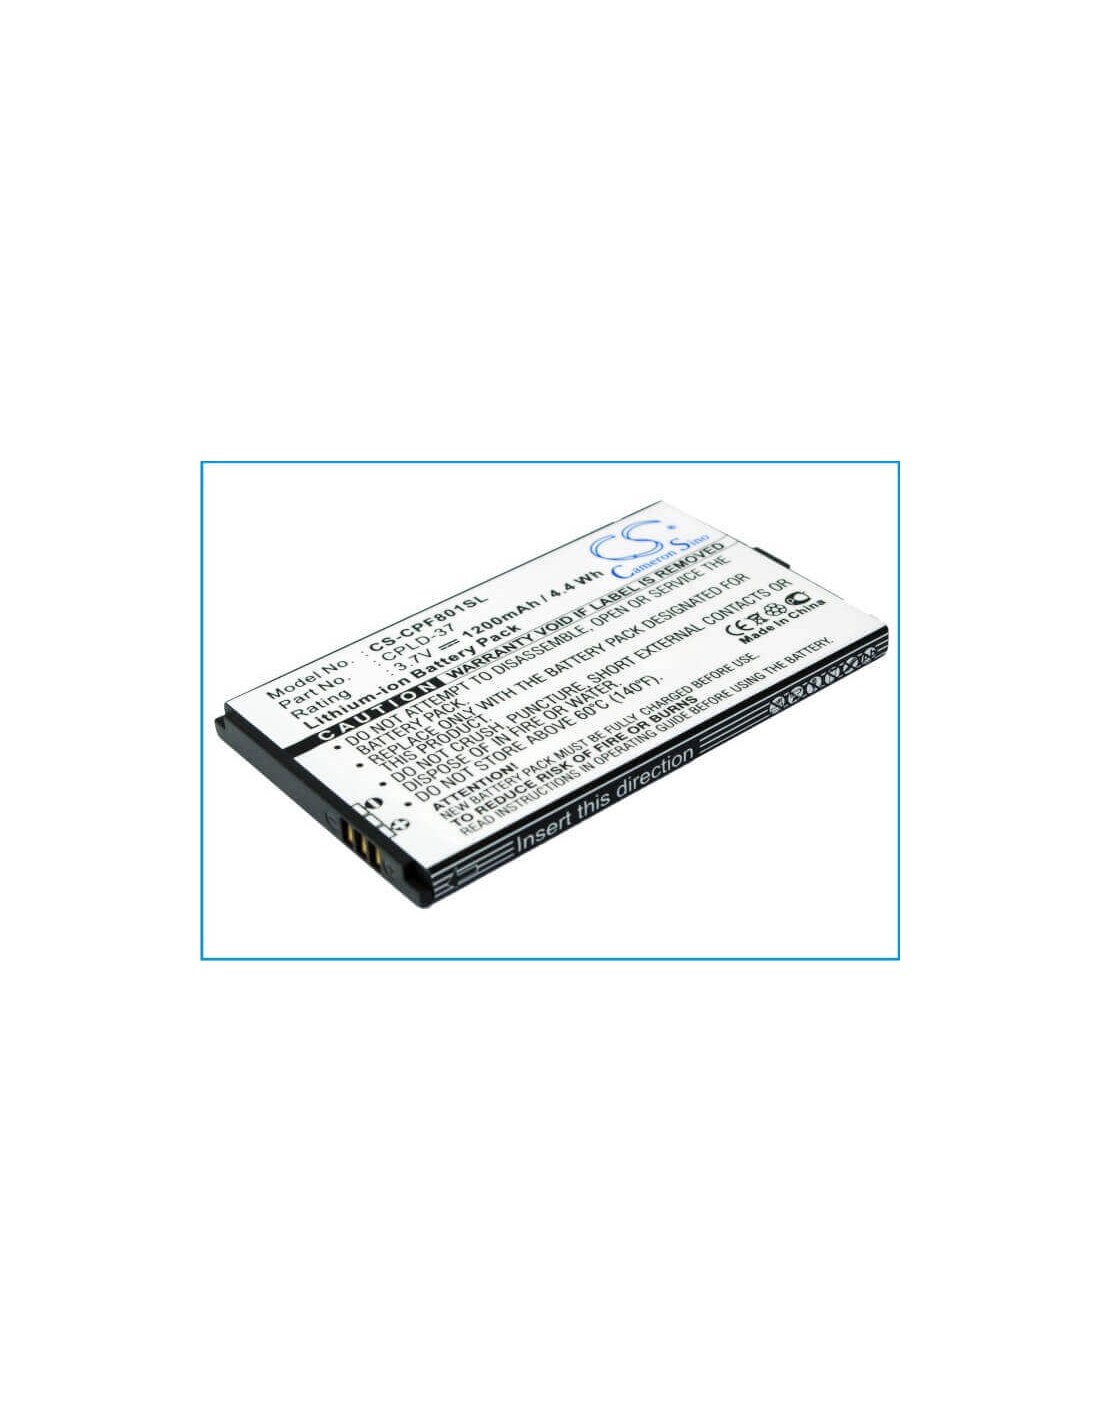 Battery for Coolpad N900, N900+, F801 3.7V, 1200mAh - 4.44Wh